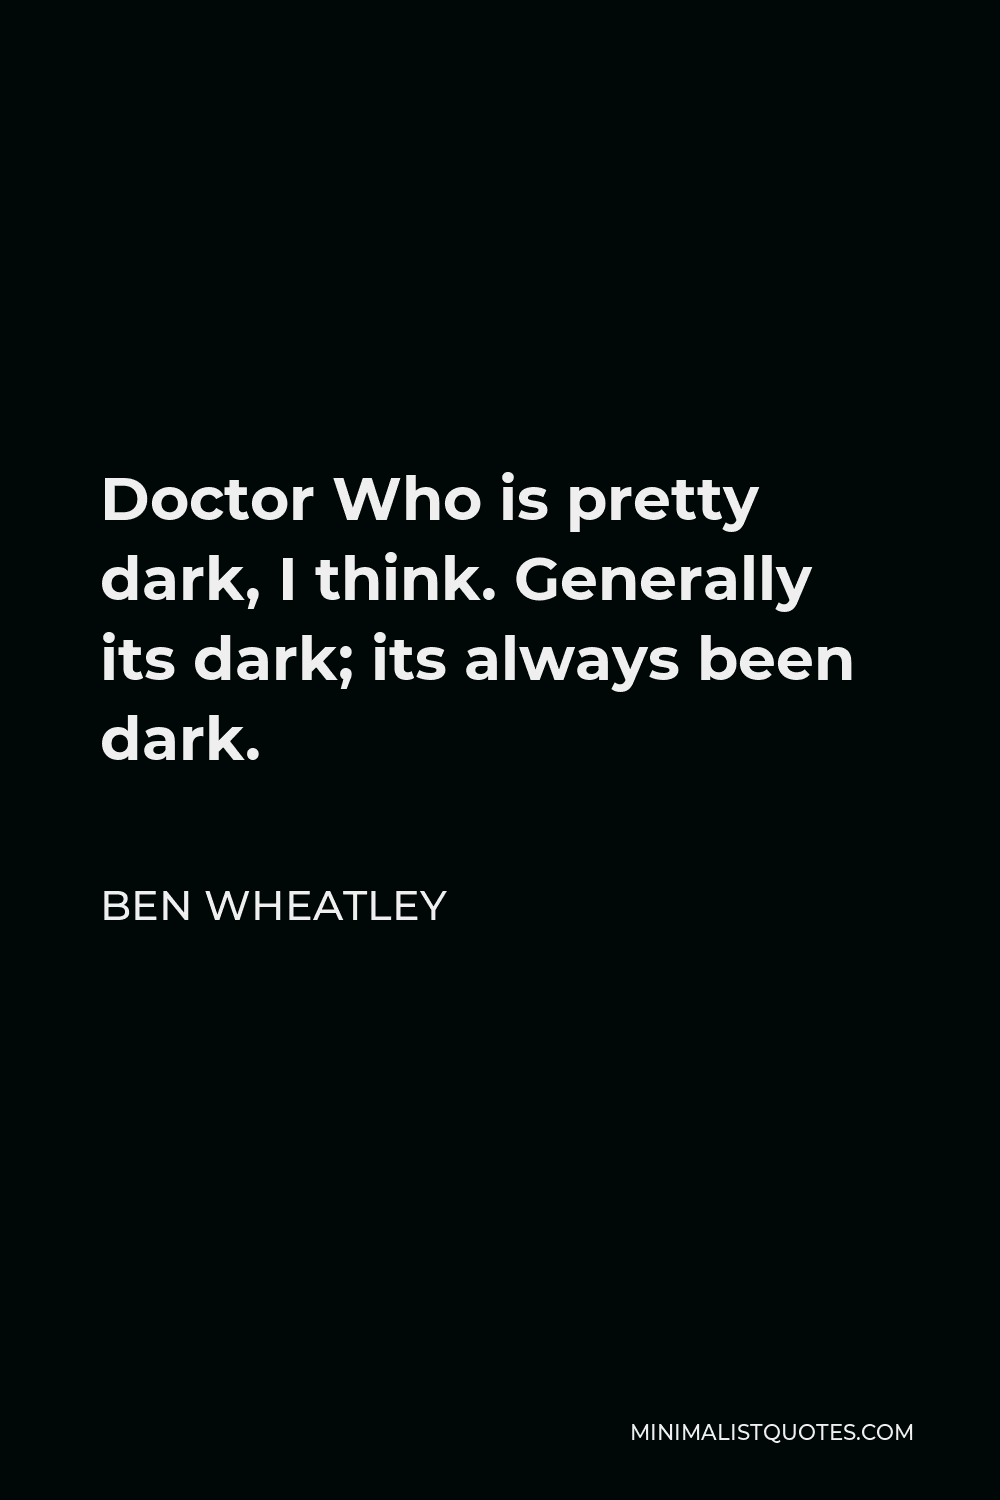 Ben Wheatley Quote - Doctor Who is pretty dark, I think. Generally its dark; its always been dark.